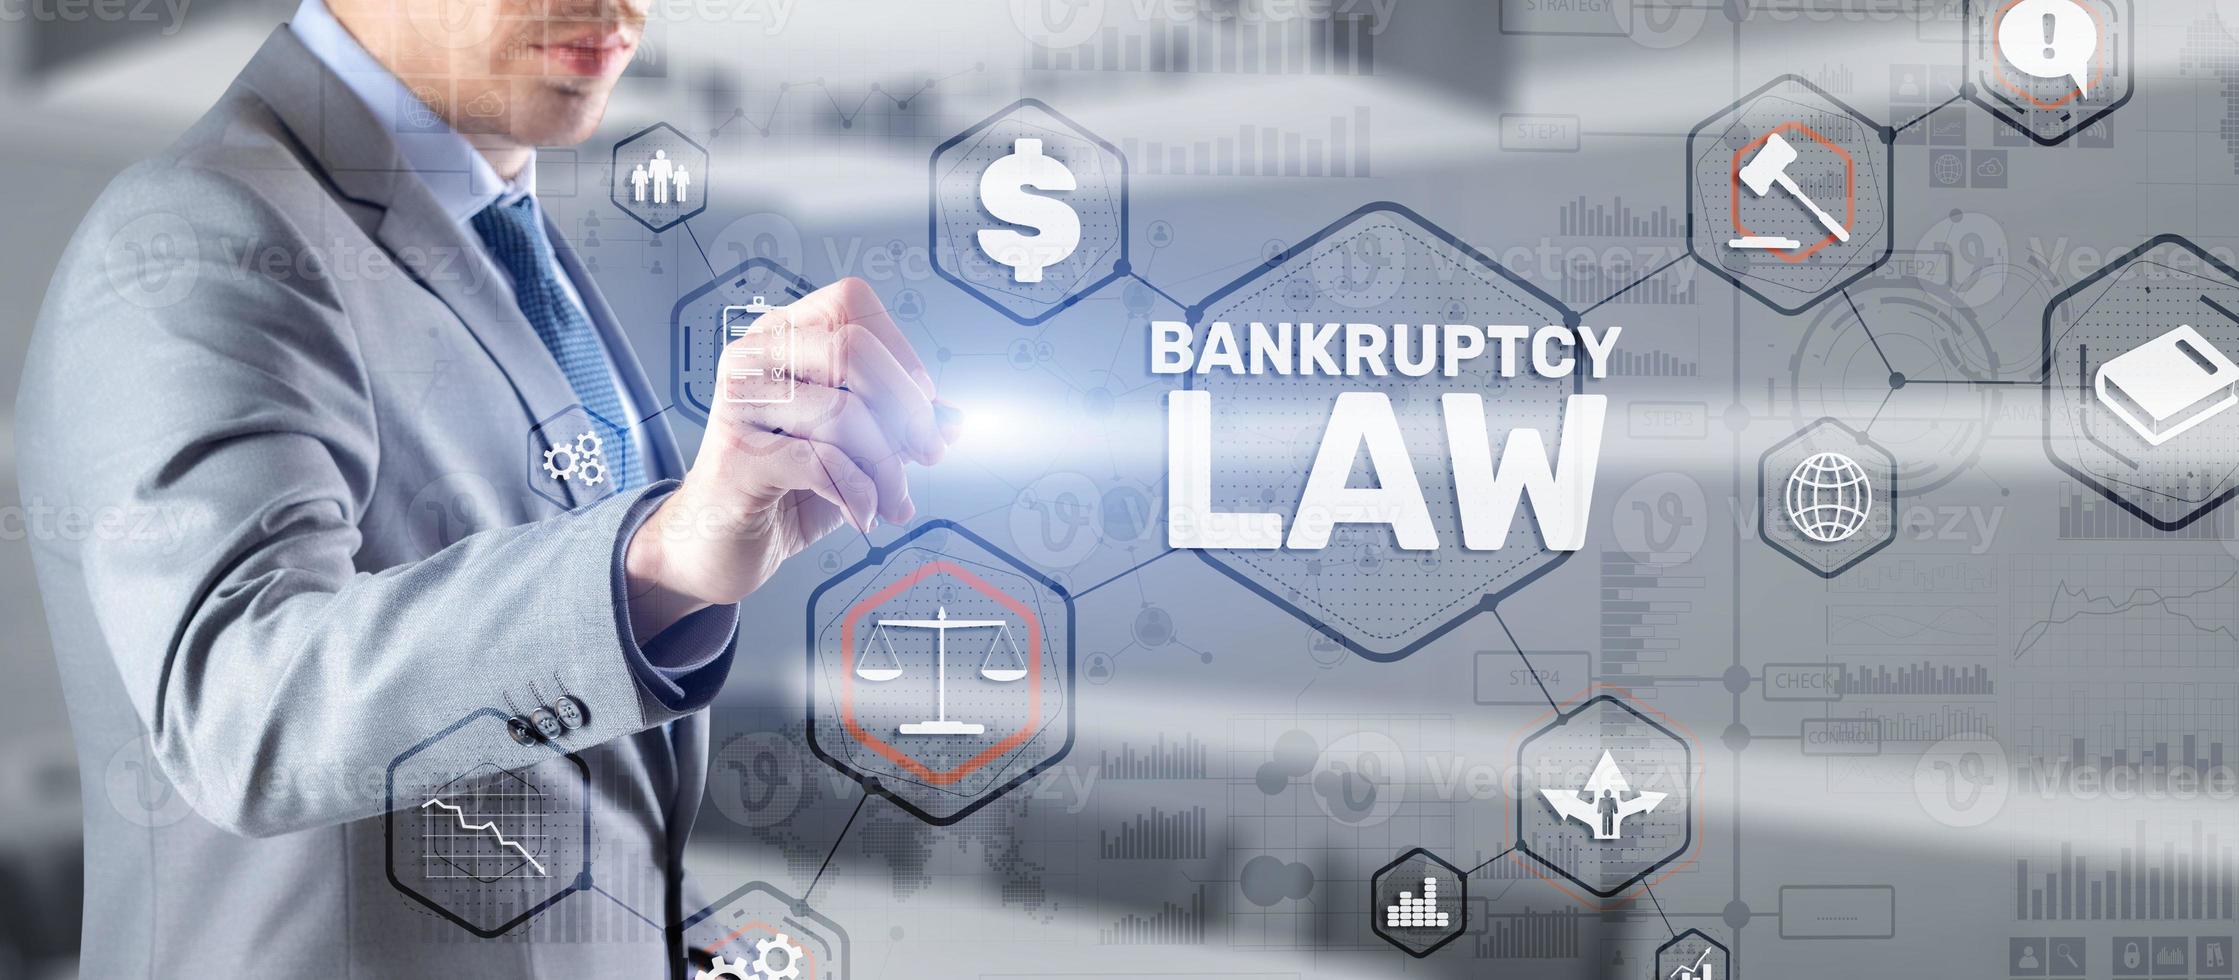 Judicial decision lawyer business concept. Bankruptcy law concept photo